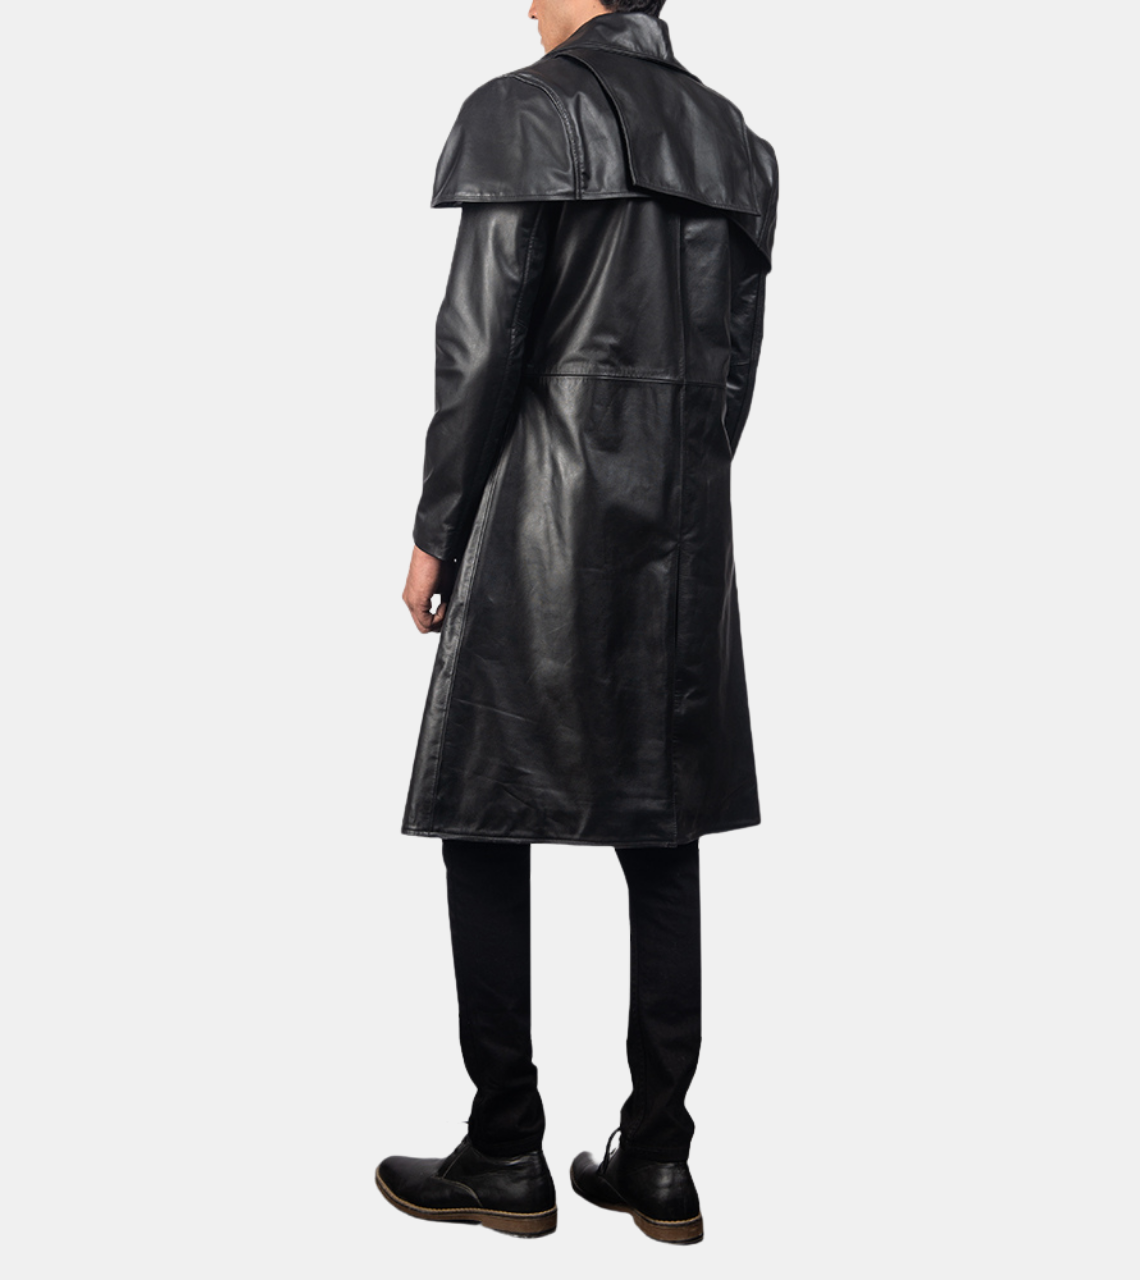 Danyon Men's Black Leather Coat Back